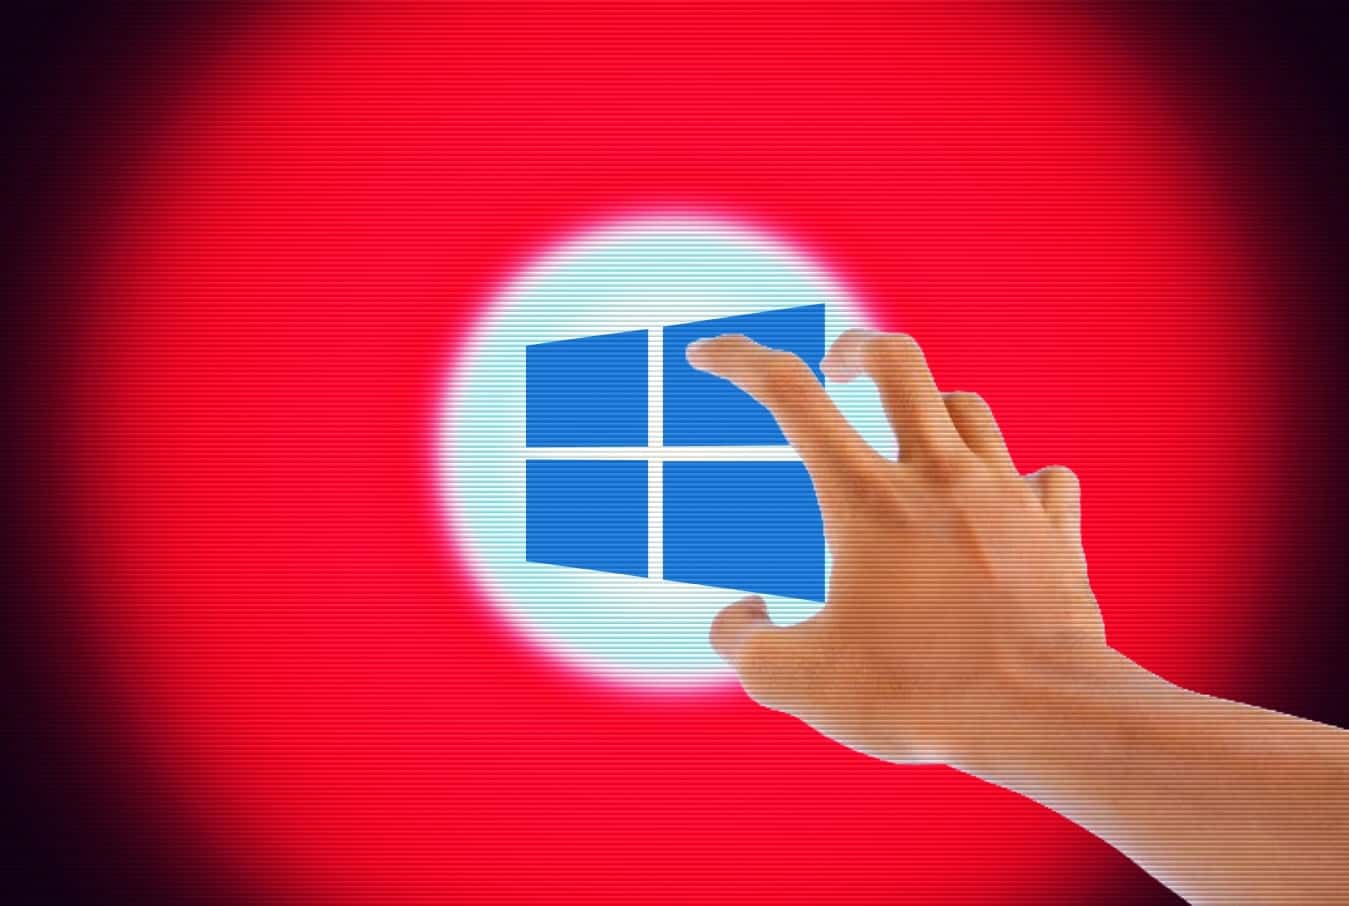 Windows finger command abused to download MineBridge backdoor